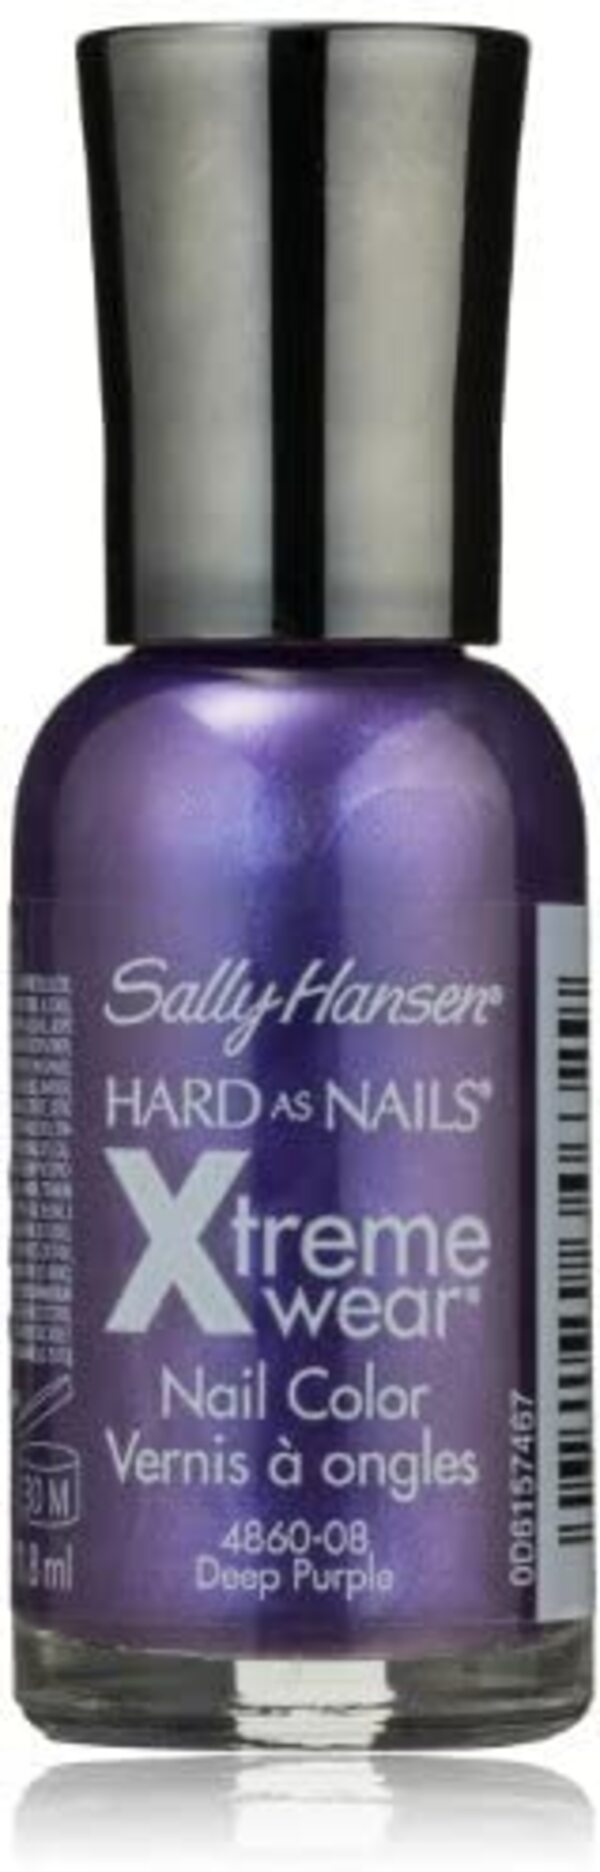 Nail polish swatch / manicure of shade Sally Hansen Deep Purple